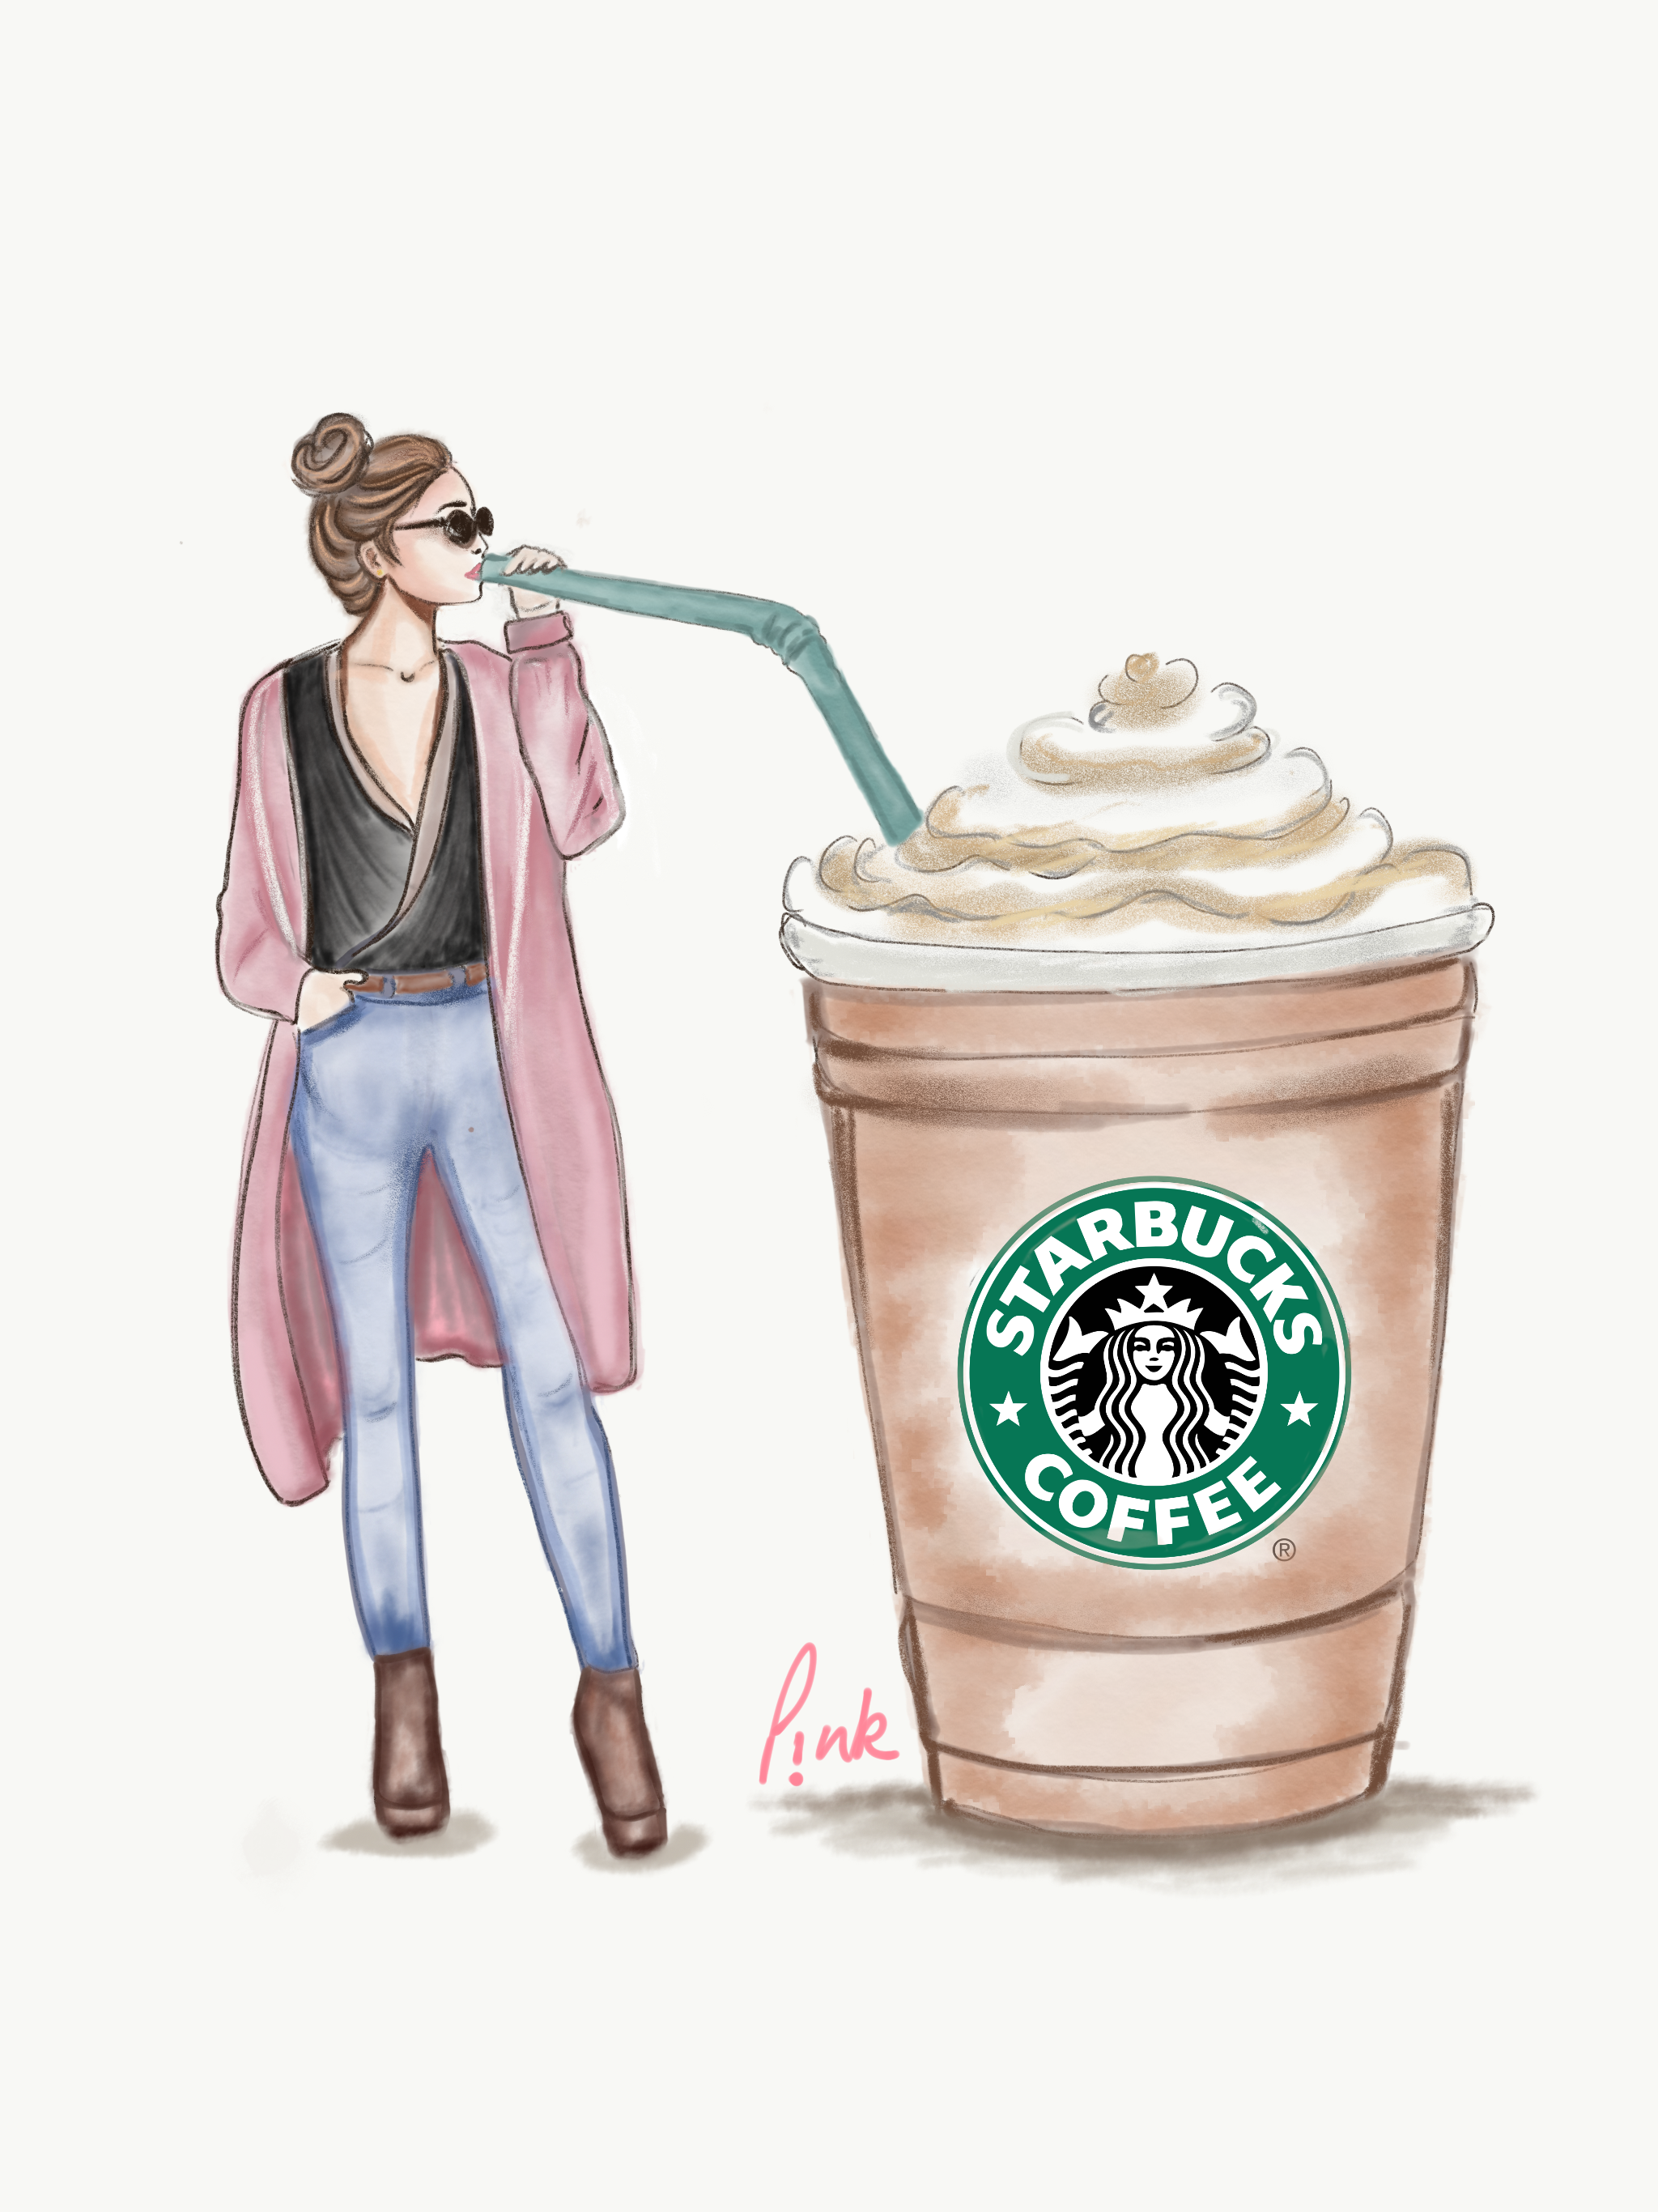 Starbucks fadhion girl. Starbucks wallpaper, Starbucks art, Starbucks drawing